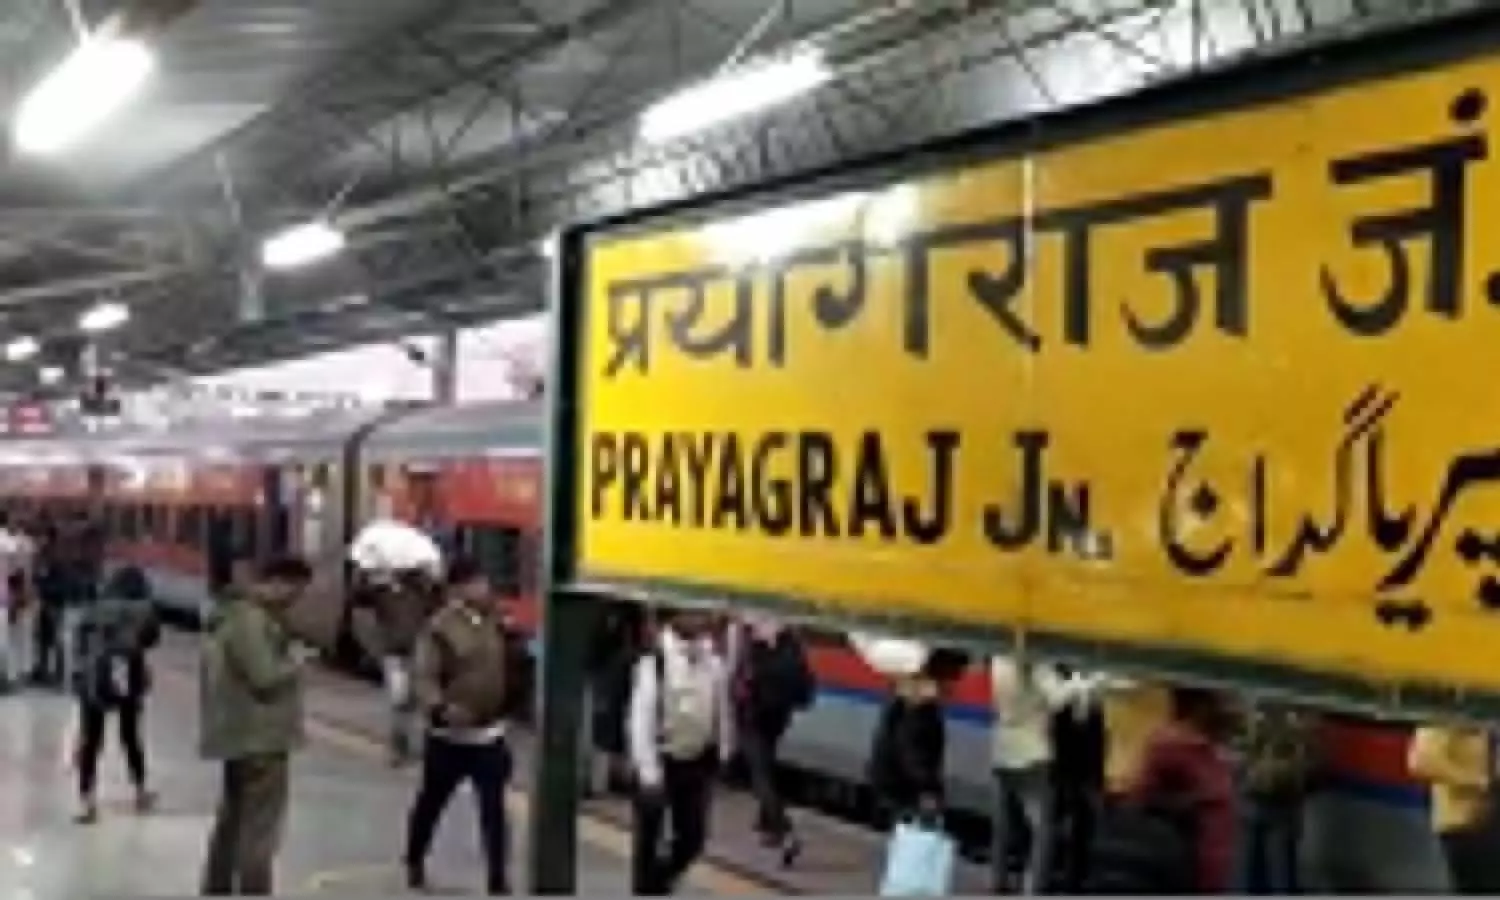 Railway will provide facility like Kumbh in Magh Mela in Prayagraj, preparation of NCR for Mahaparva intensified